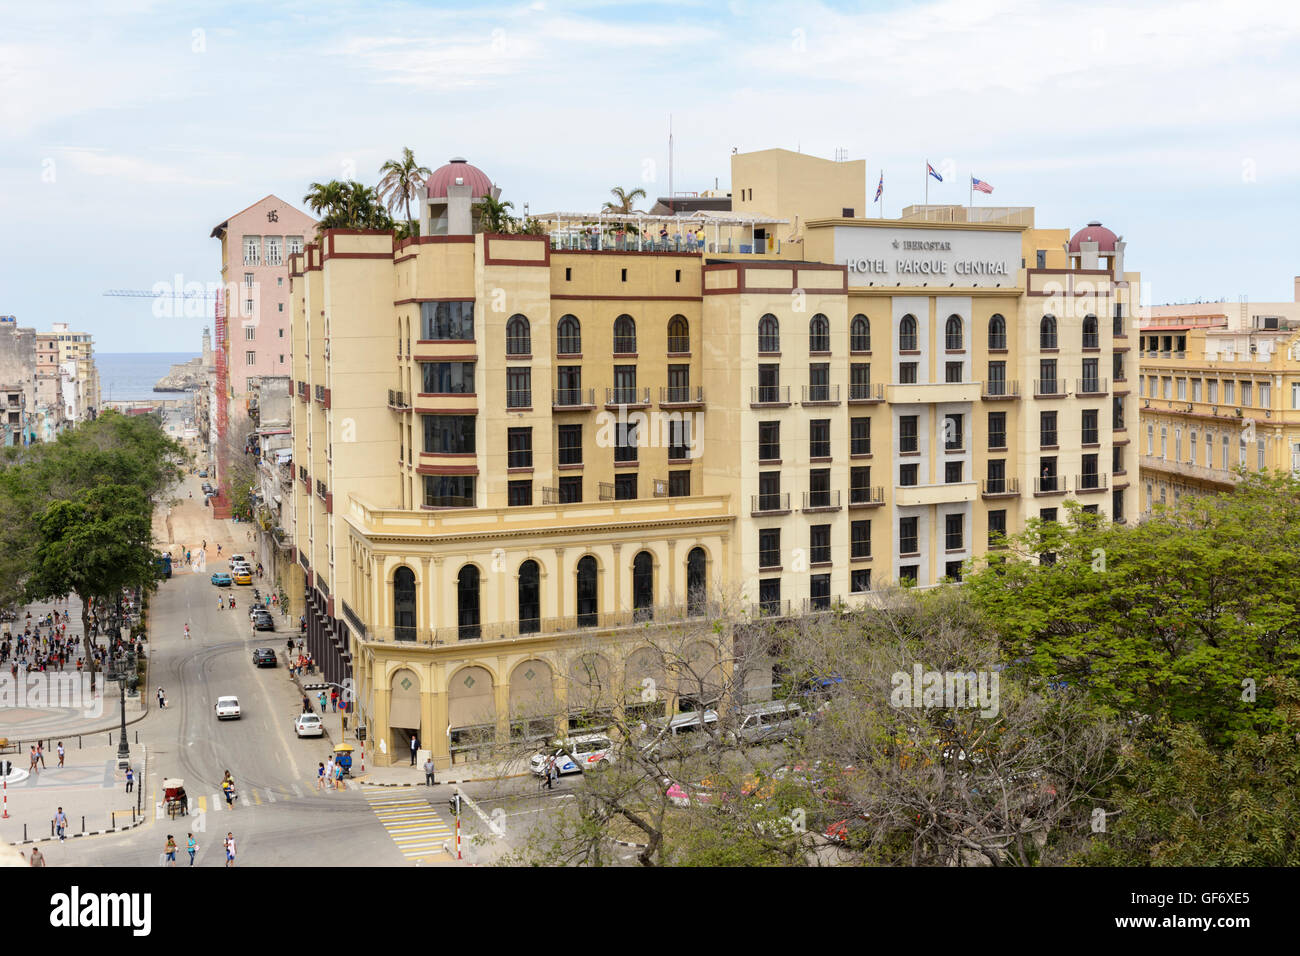 View of Hotel Parque Central, Old Havana (La Habana Vieja), Cuba Stock Photo